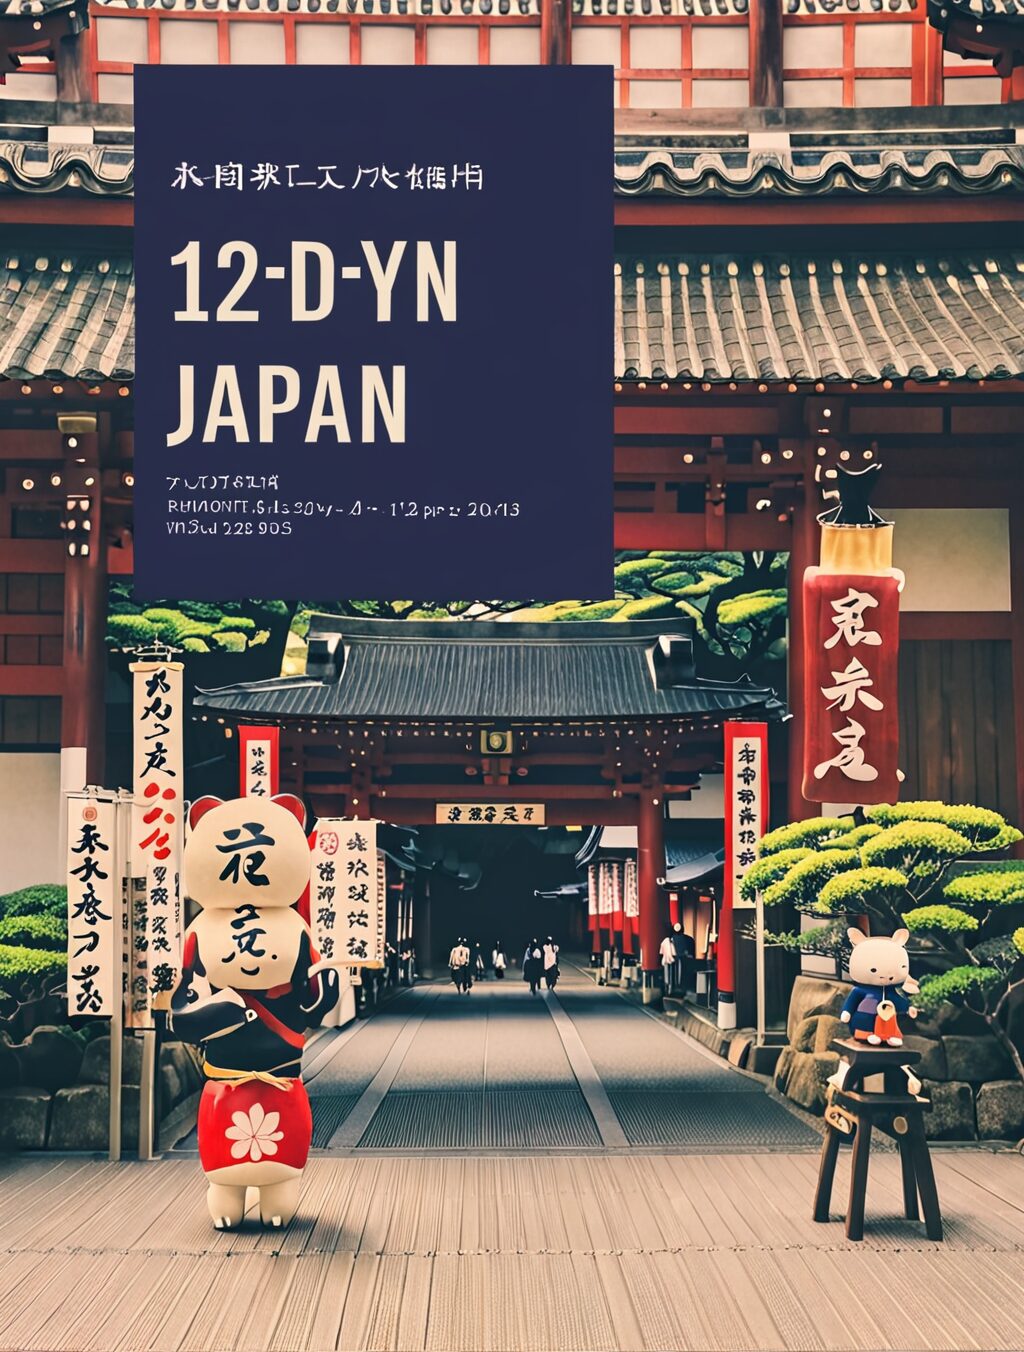 12 day japan itinerary reddit